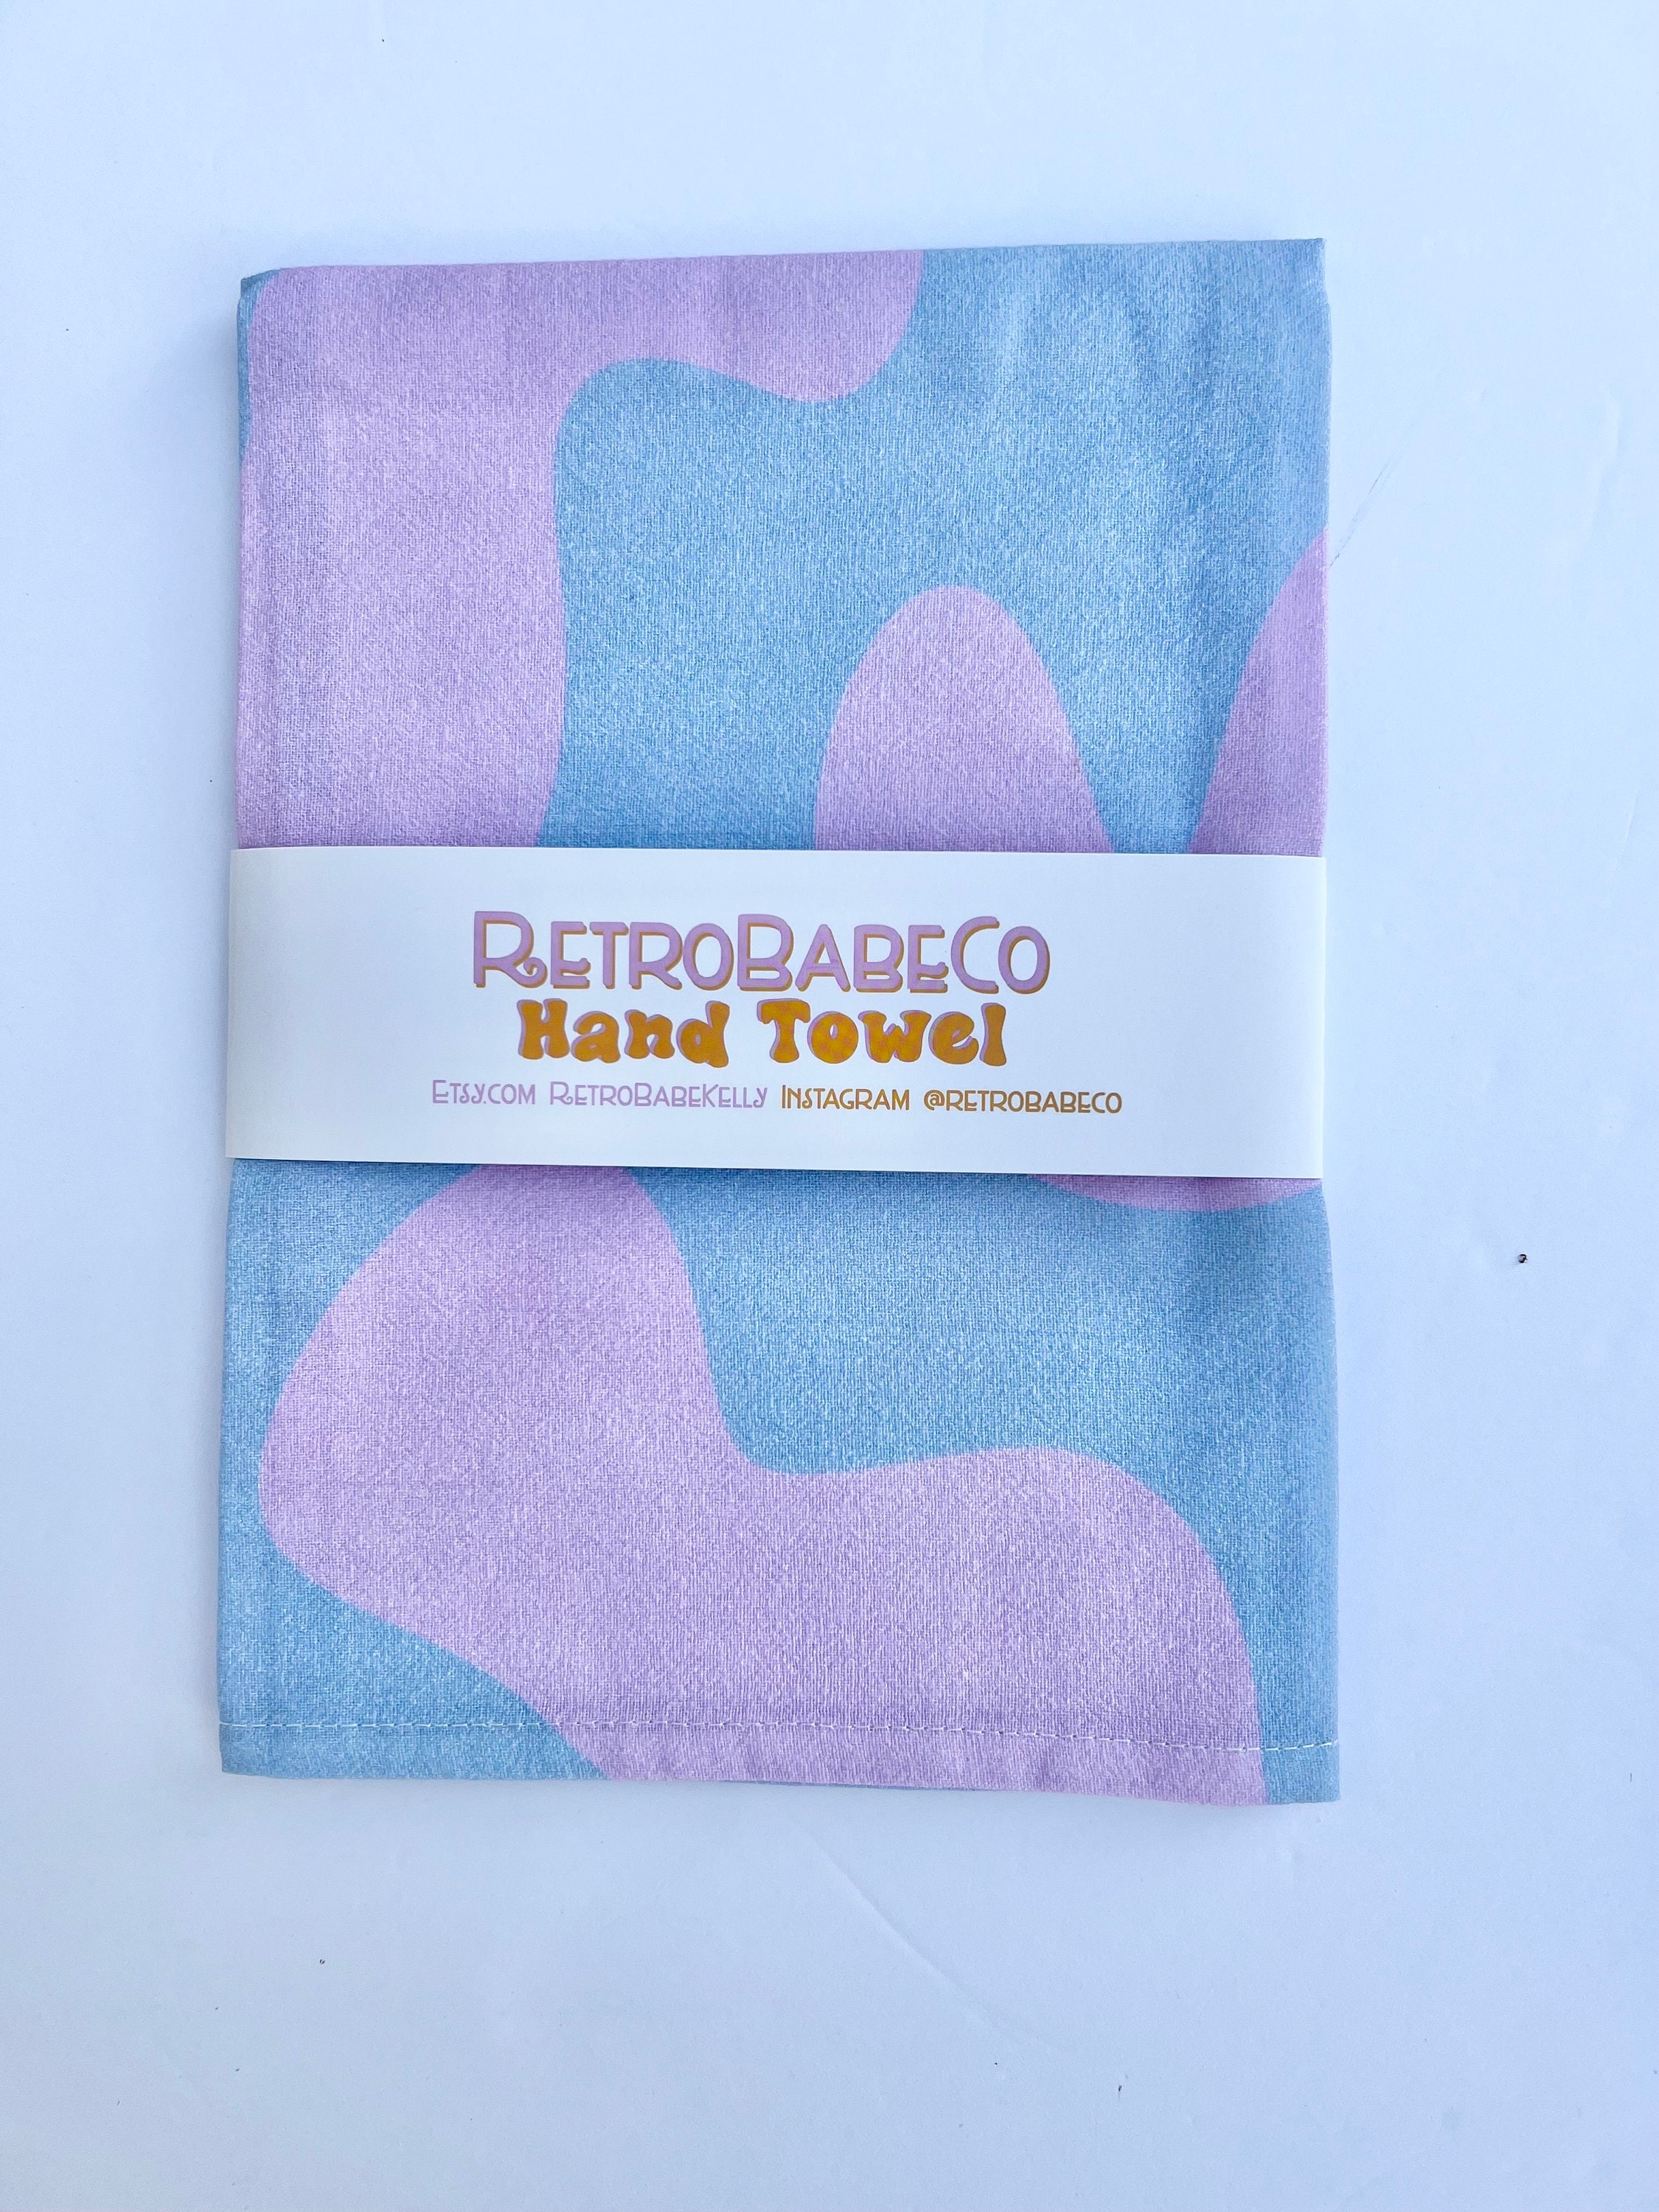 Boho Rainbow Witchy Microfiber Dishwashing Cloths - Hand Towels